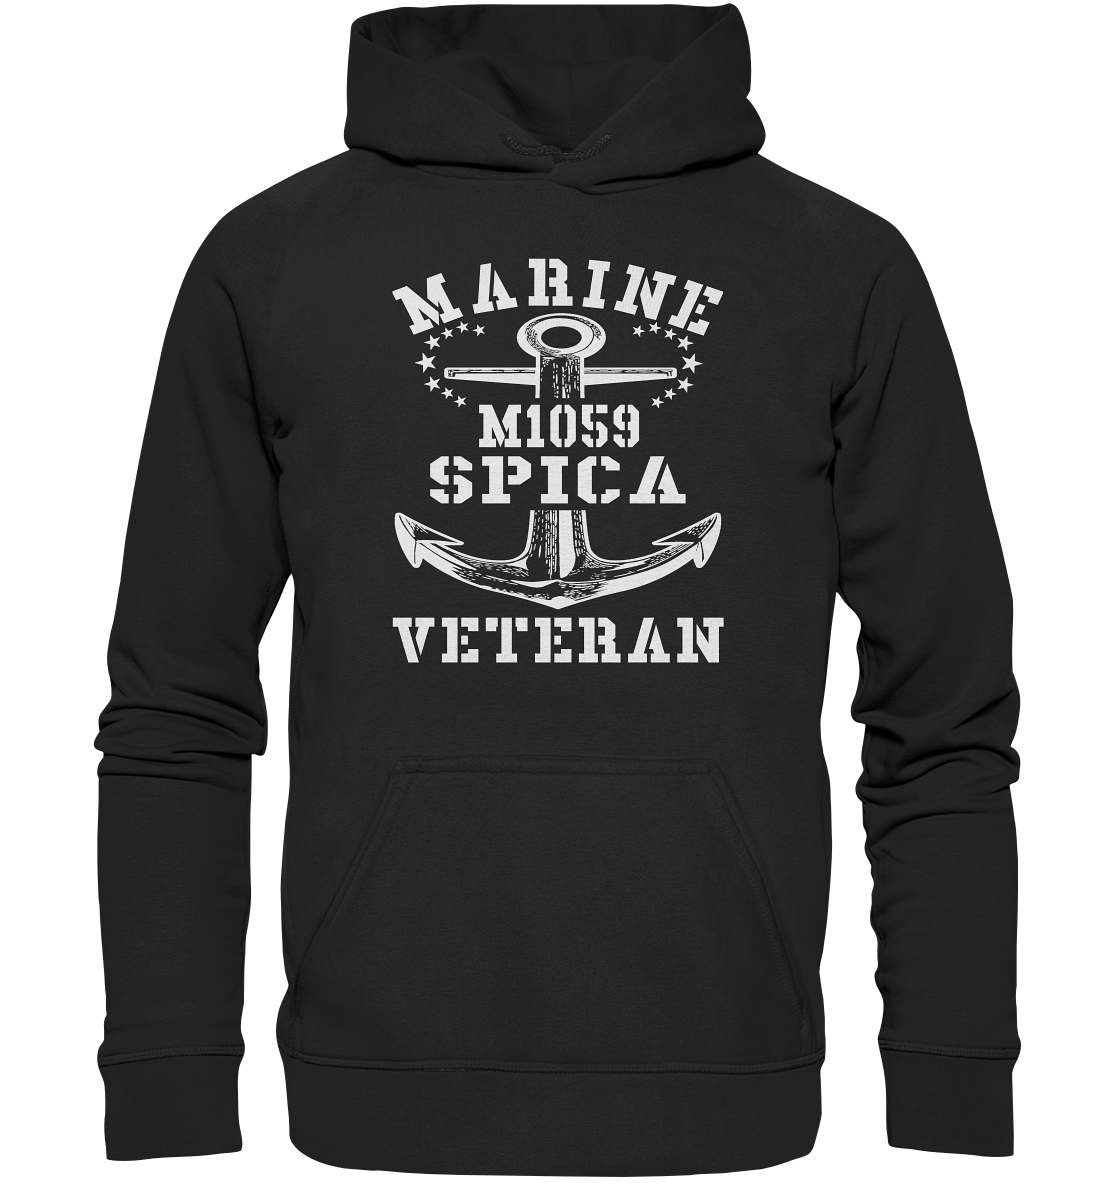 SM-Boot M1059 SPICA Marine Veteran - Basic Unisex Hoodie XL